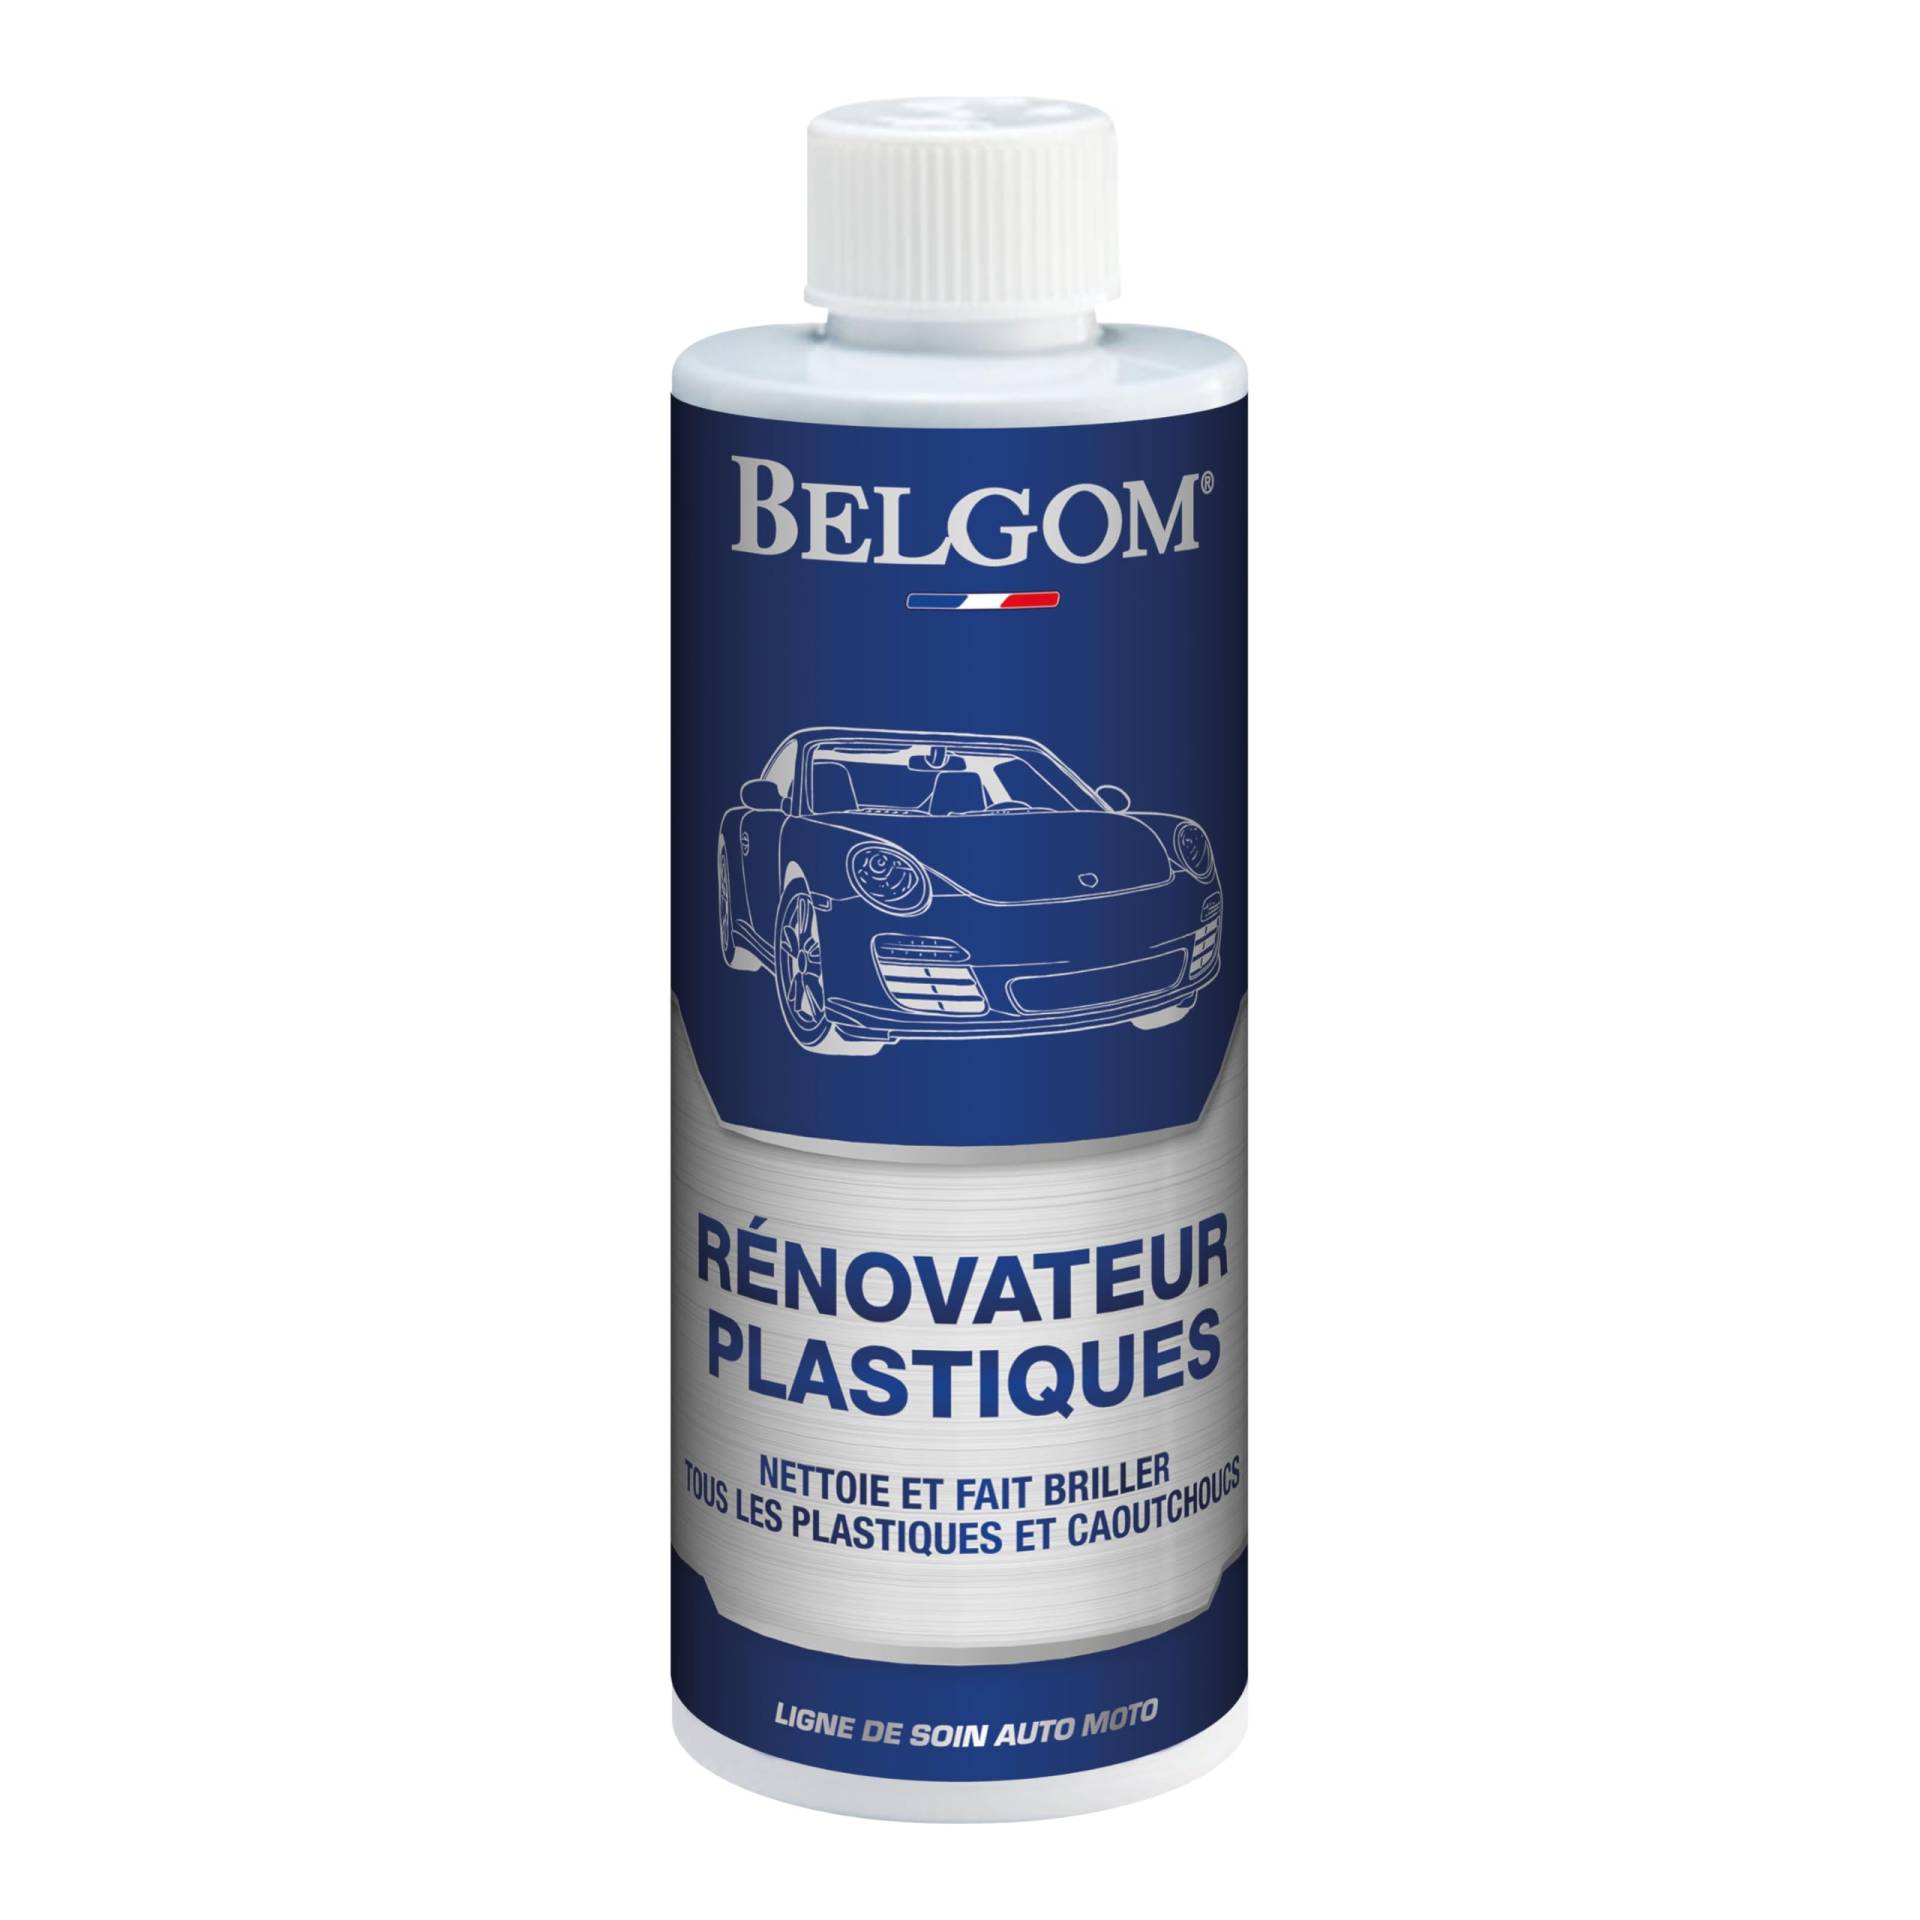 Belgom 05.0500 Renovador Kunststoffen, 500 ml von Belgom